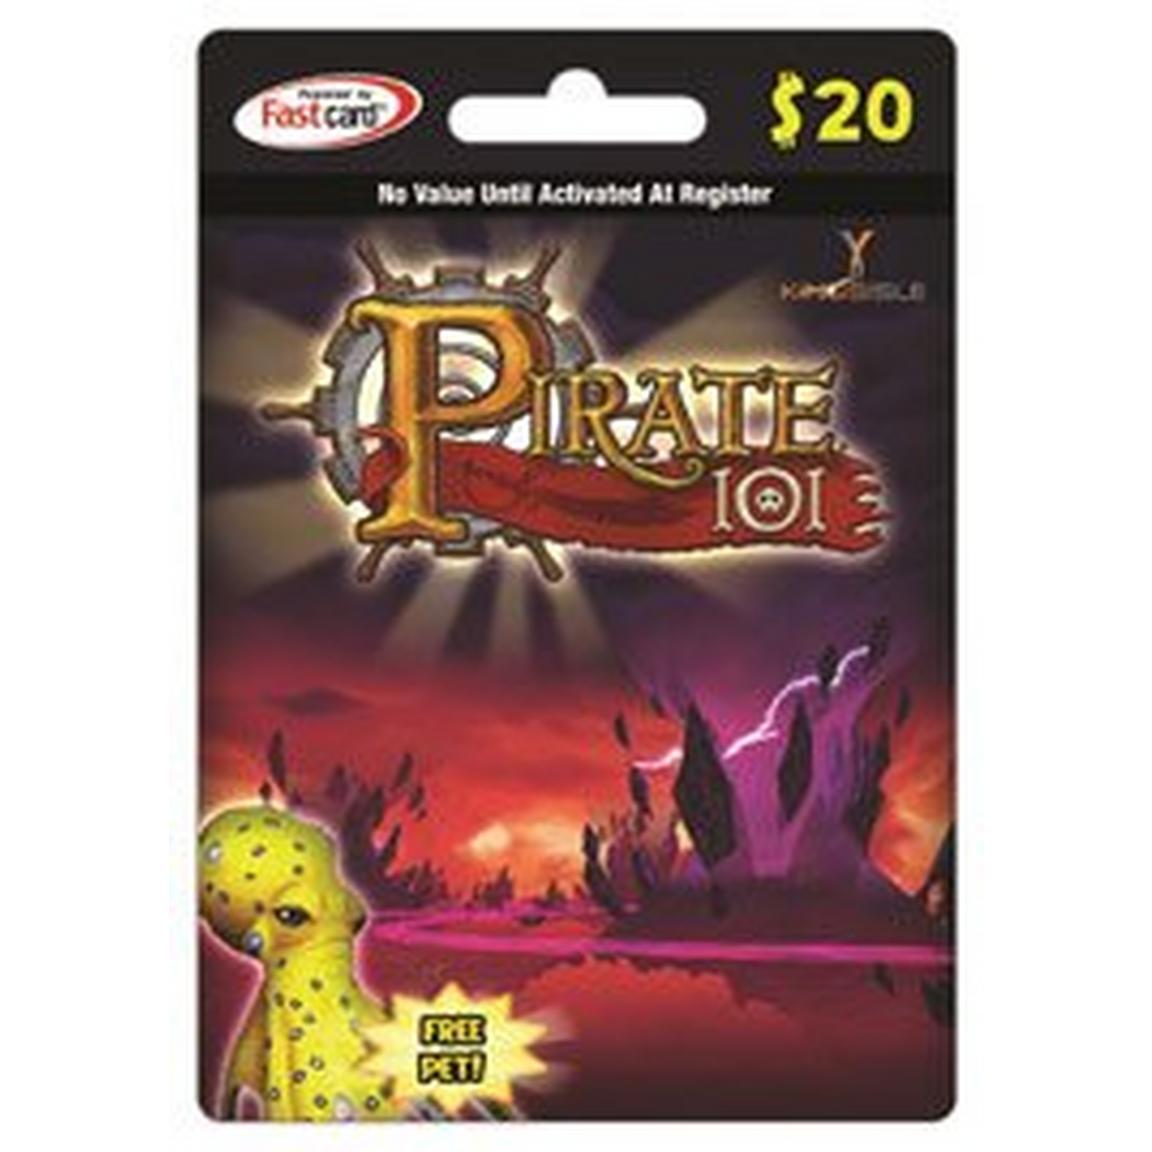 KingsIsle Entertainment Pirate 101 $20